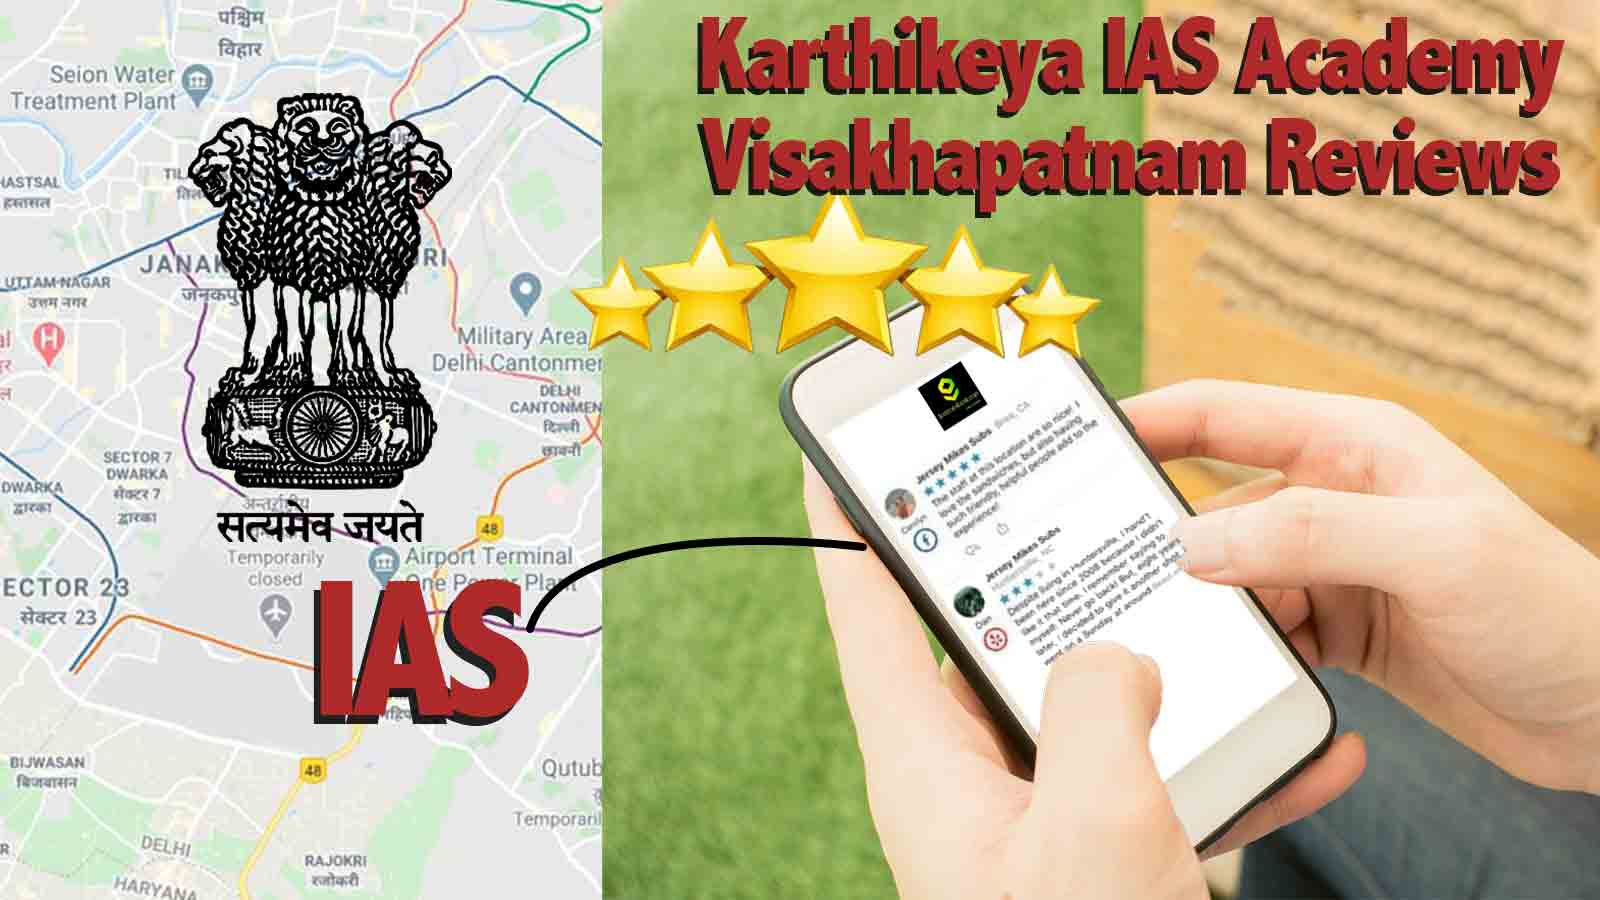 Karthikeya IAS Academy Visakhapatnam Review